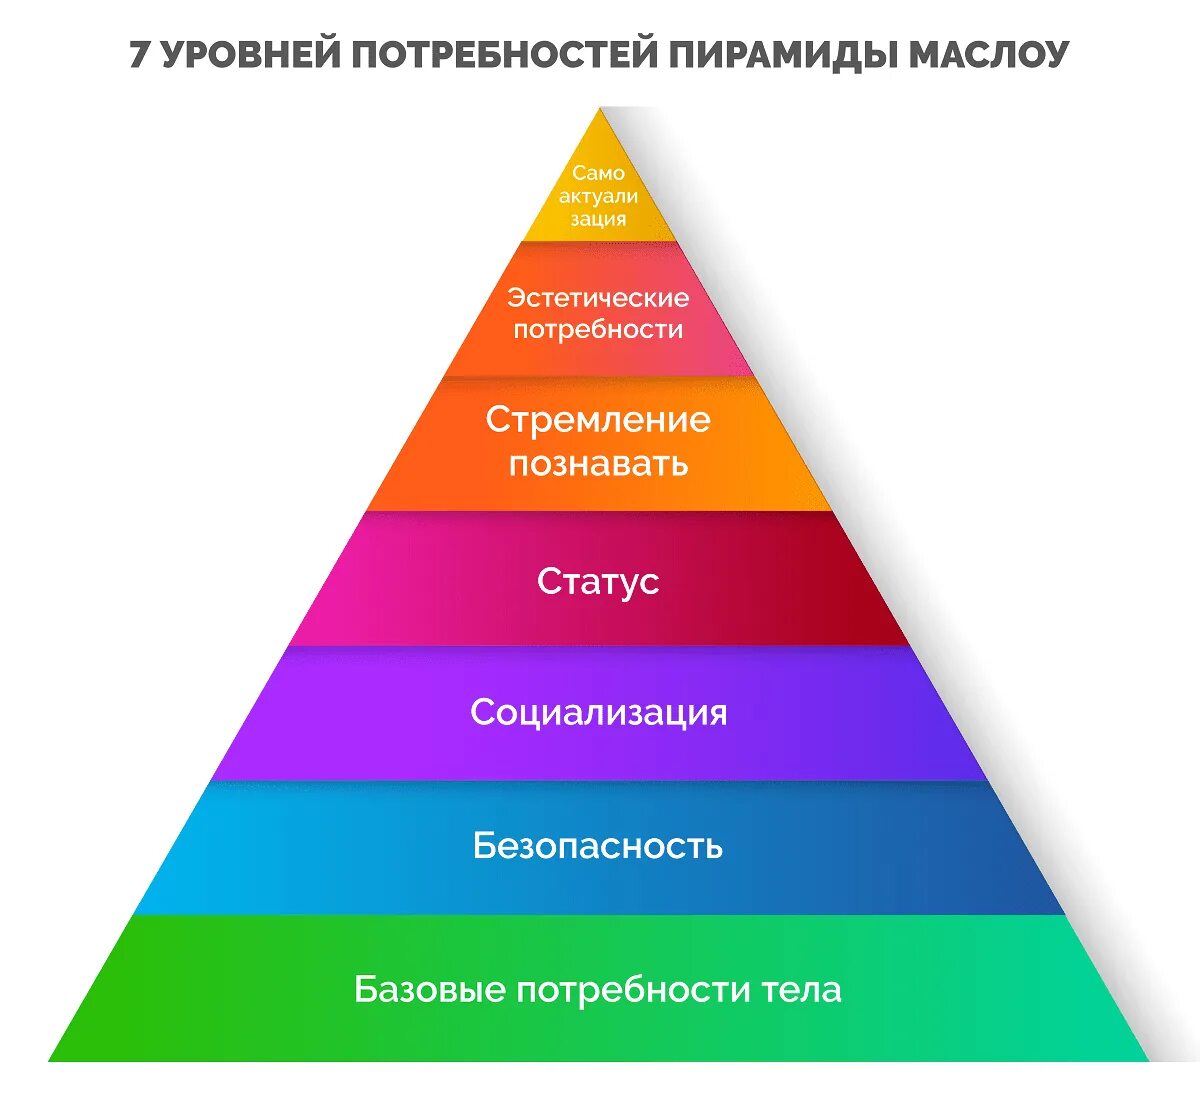 5 Маслоу. Пирамида потребностей Маслоу. Пирамида потребностей Маслоу 7 уровней. Пирамида Абрахама Маслоу 5 ступеней.